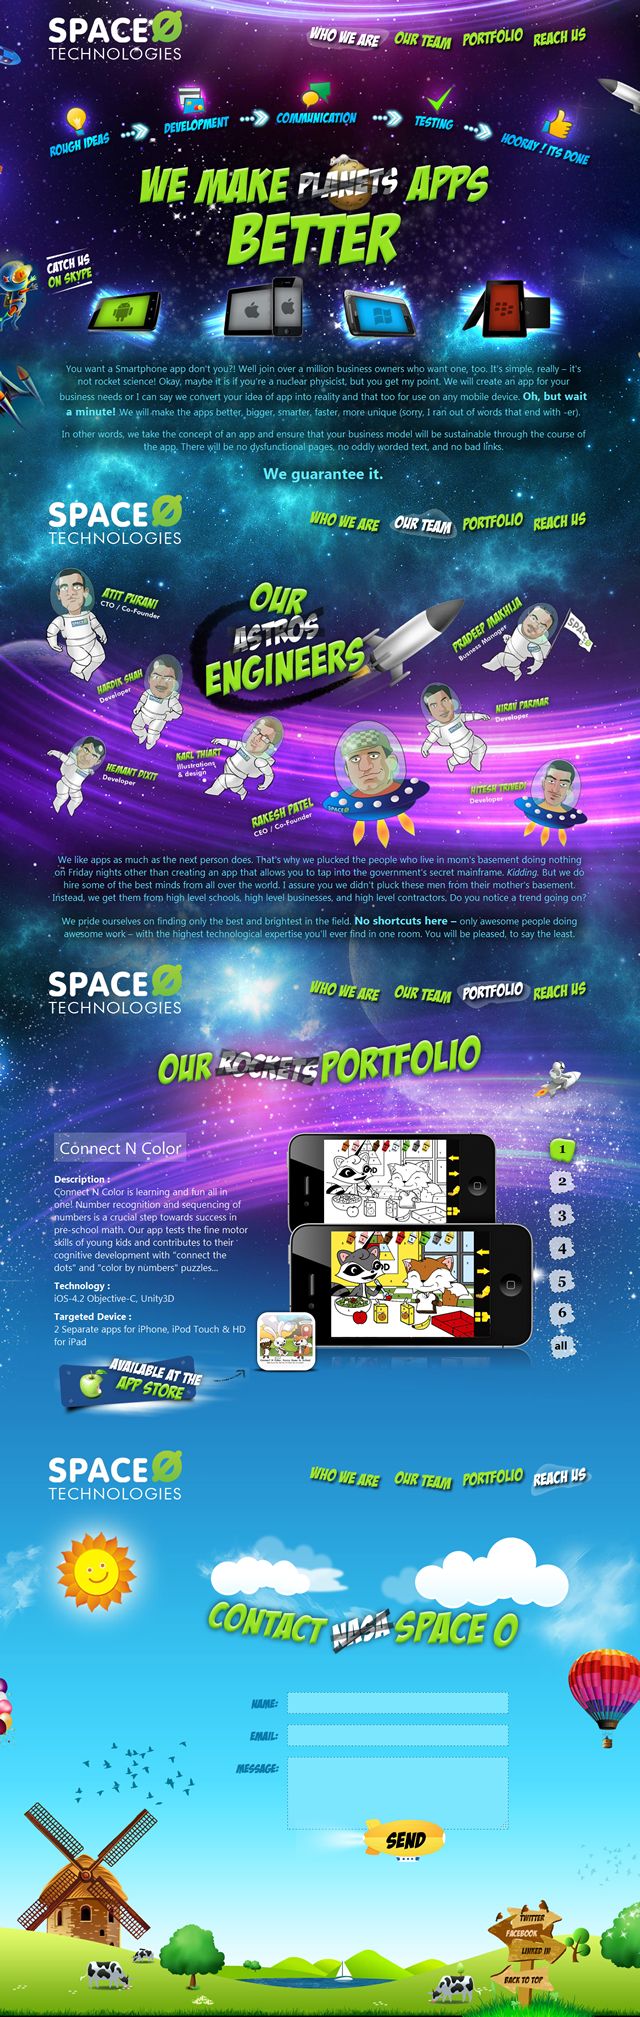 Space O Technologies screenshot